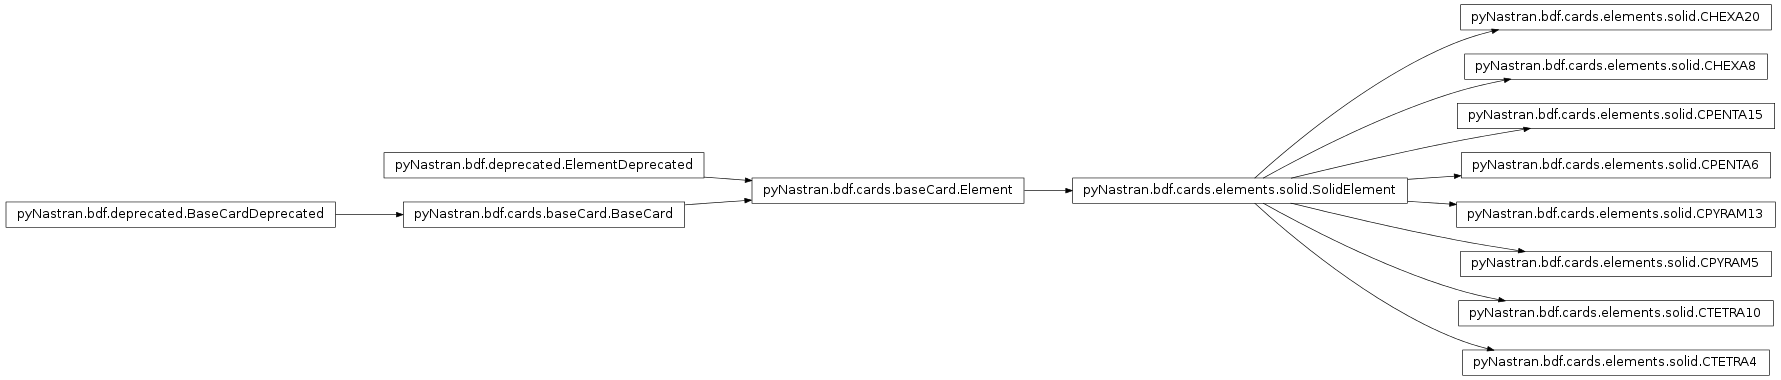 Inheritance diagram of pyNastran.bdf.cards.elements.solid